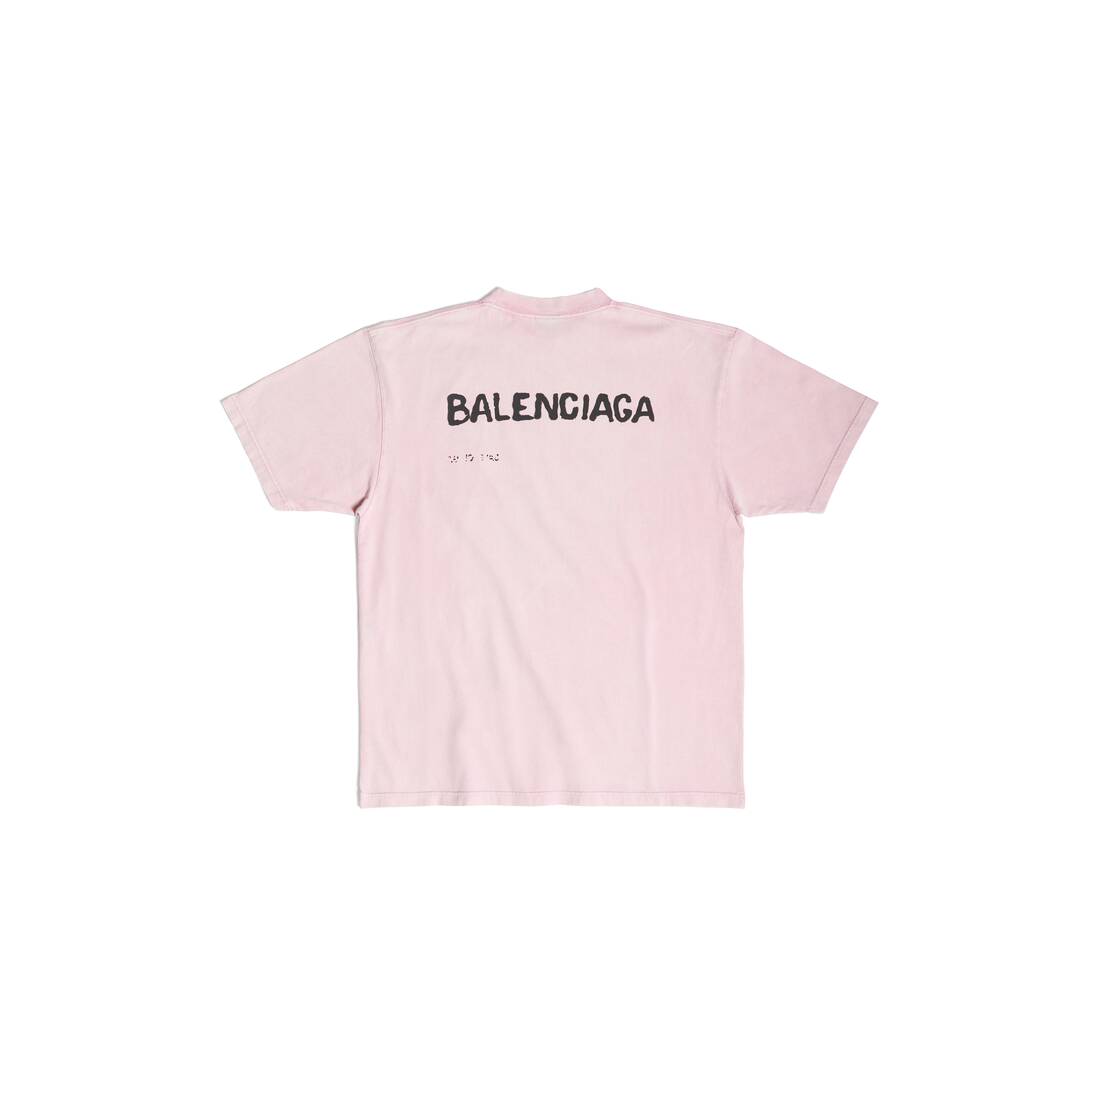 Womens Balenciaga Back Tshirt Medium Fit in Fluo Pink  Balenciaga NL